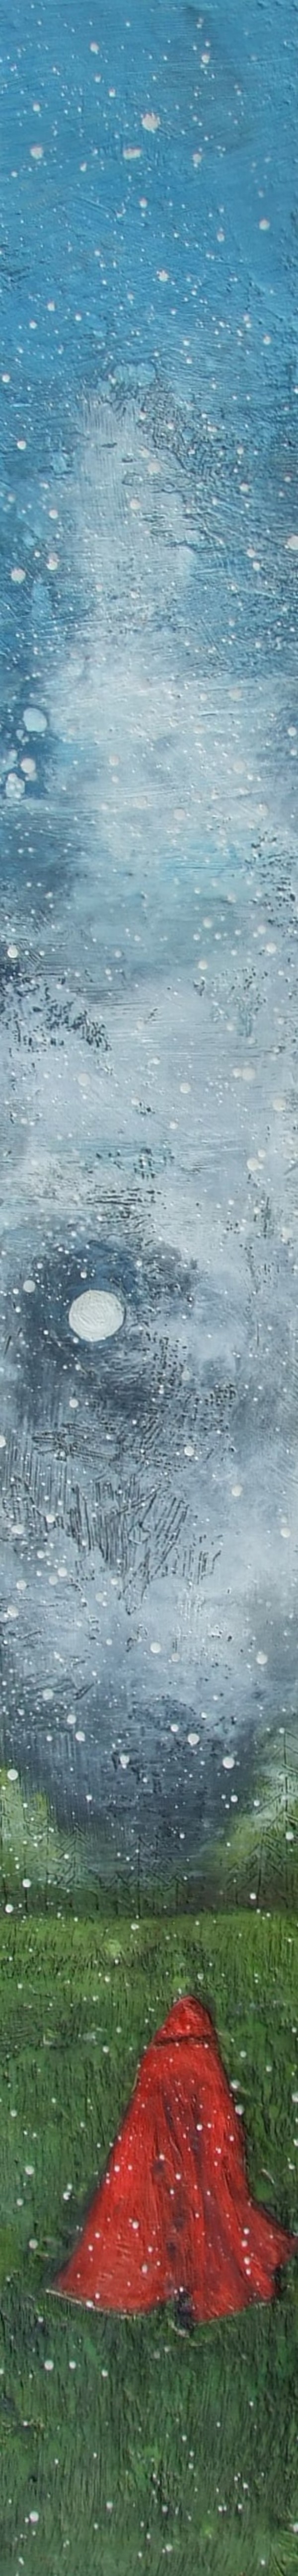 Beneath the Graceful Moon by Susan  Wallis